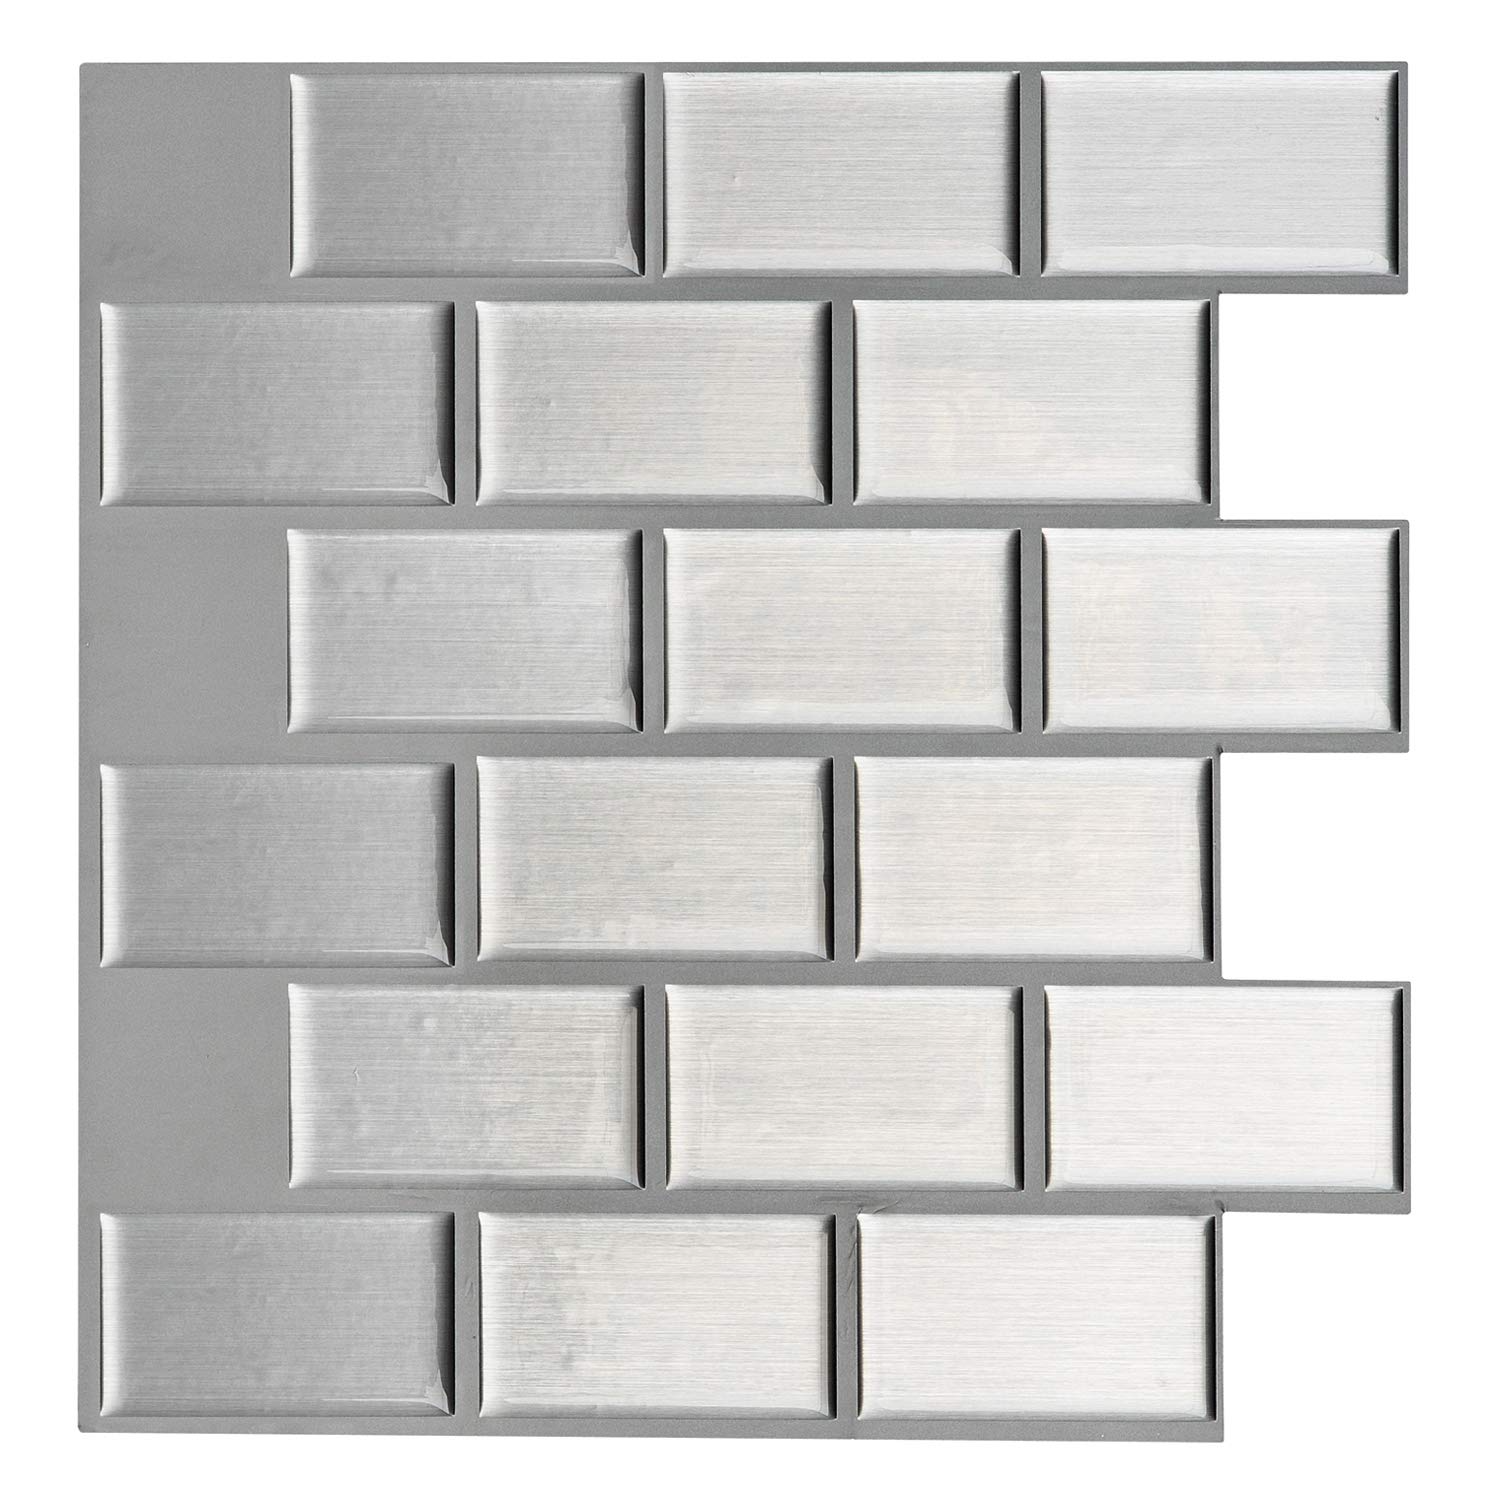 A17004 - Peel N Stick Kitchen Backsplash Wall Tile, Silver Subway Set of 10